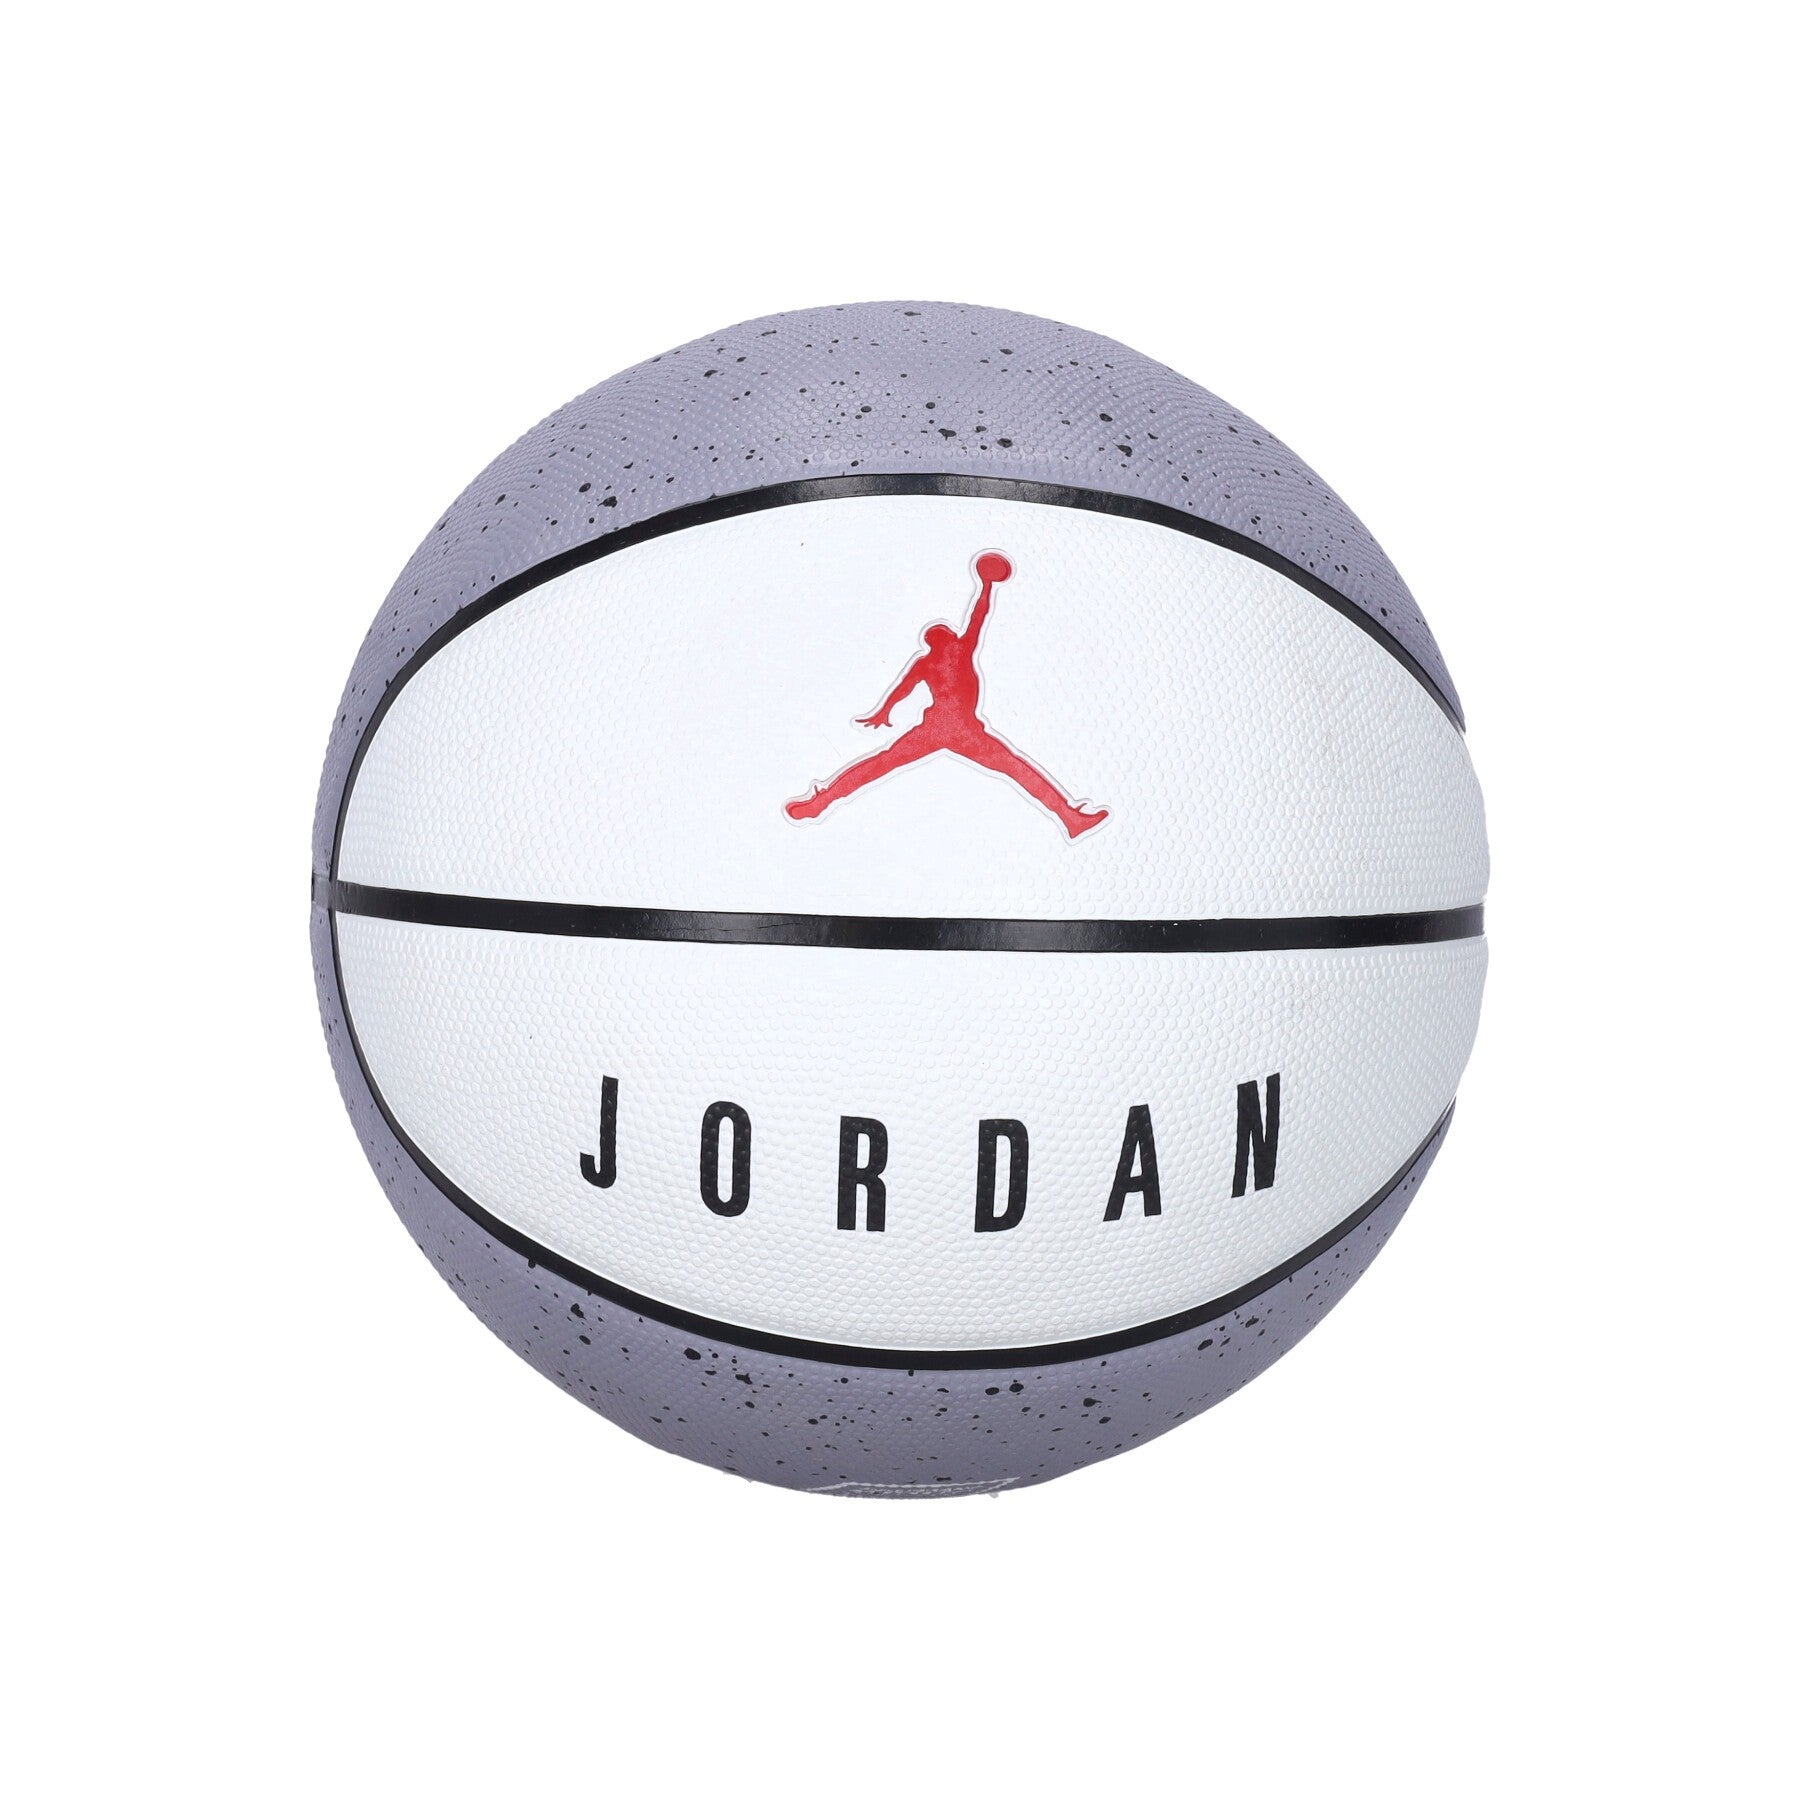 Jordan Nba, Pallone Uomo Playground Size 7, Cement Grey/white/black/fire Red